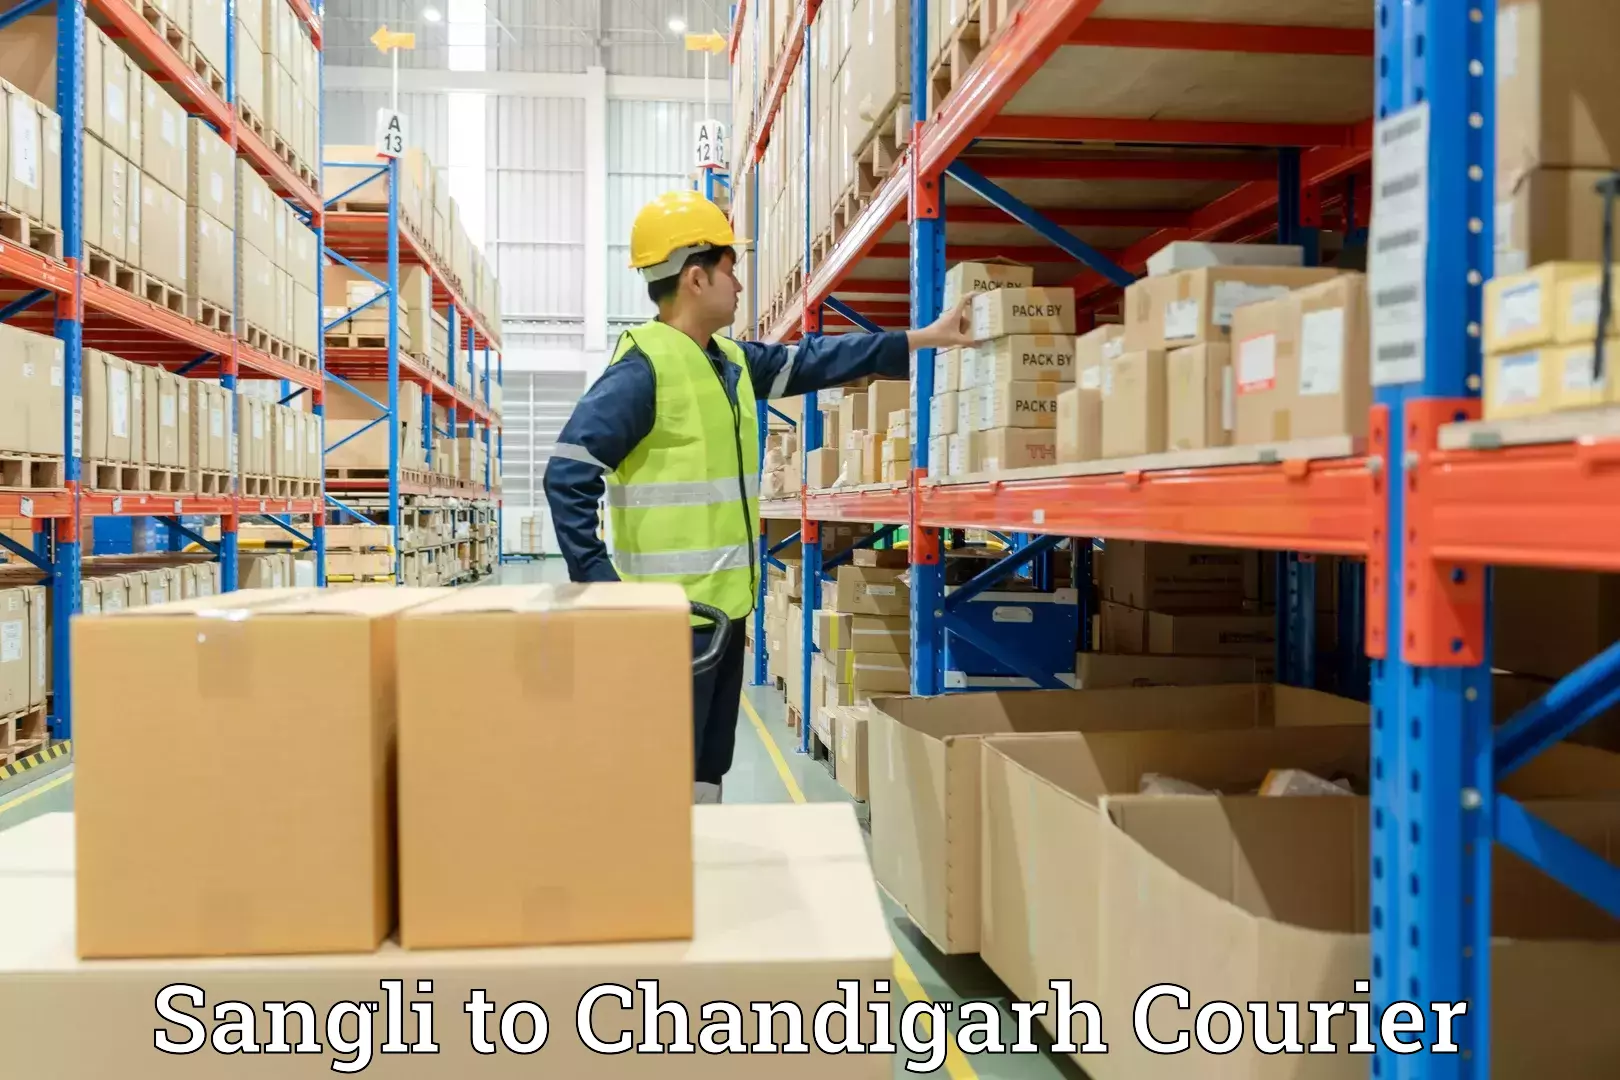 Furniture moving experts Sangli to Chandigarh